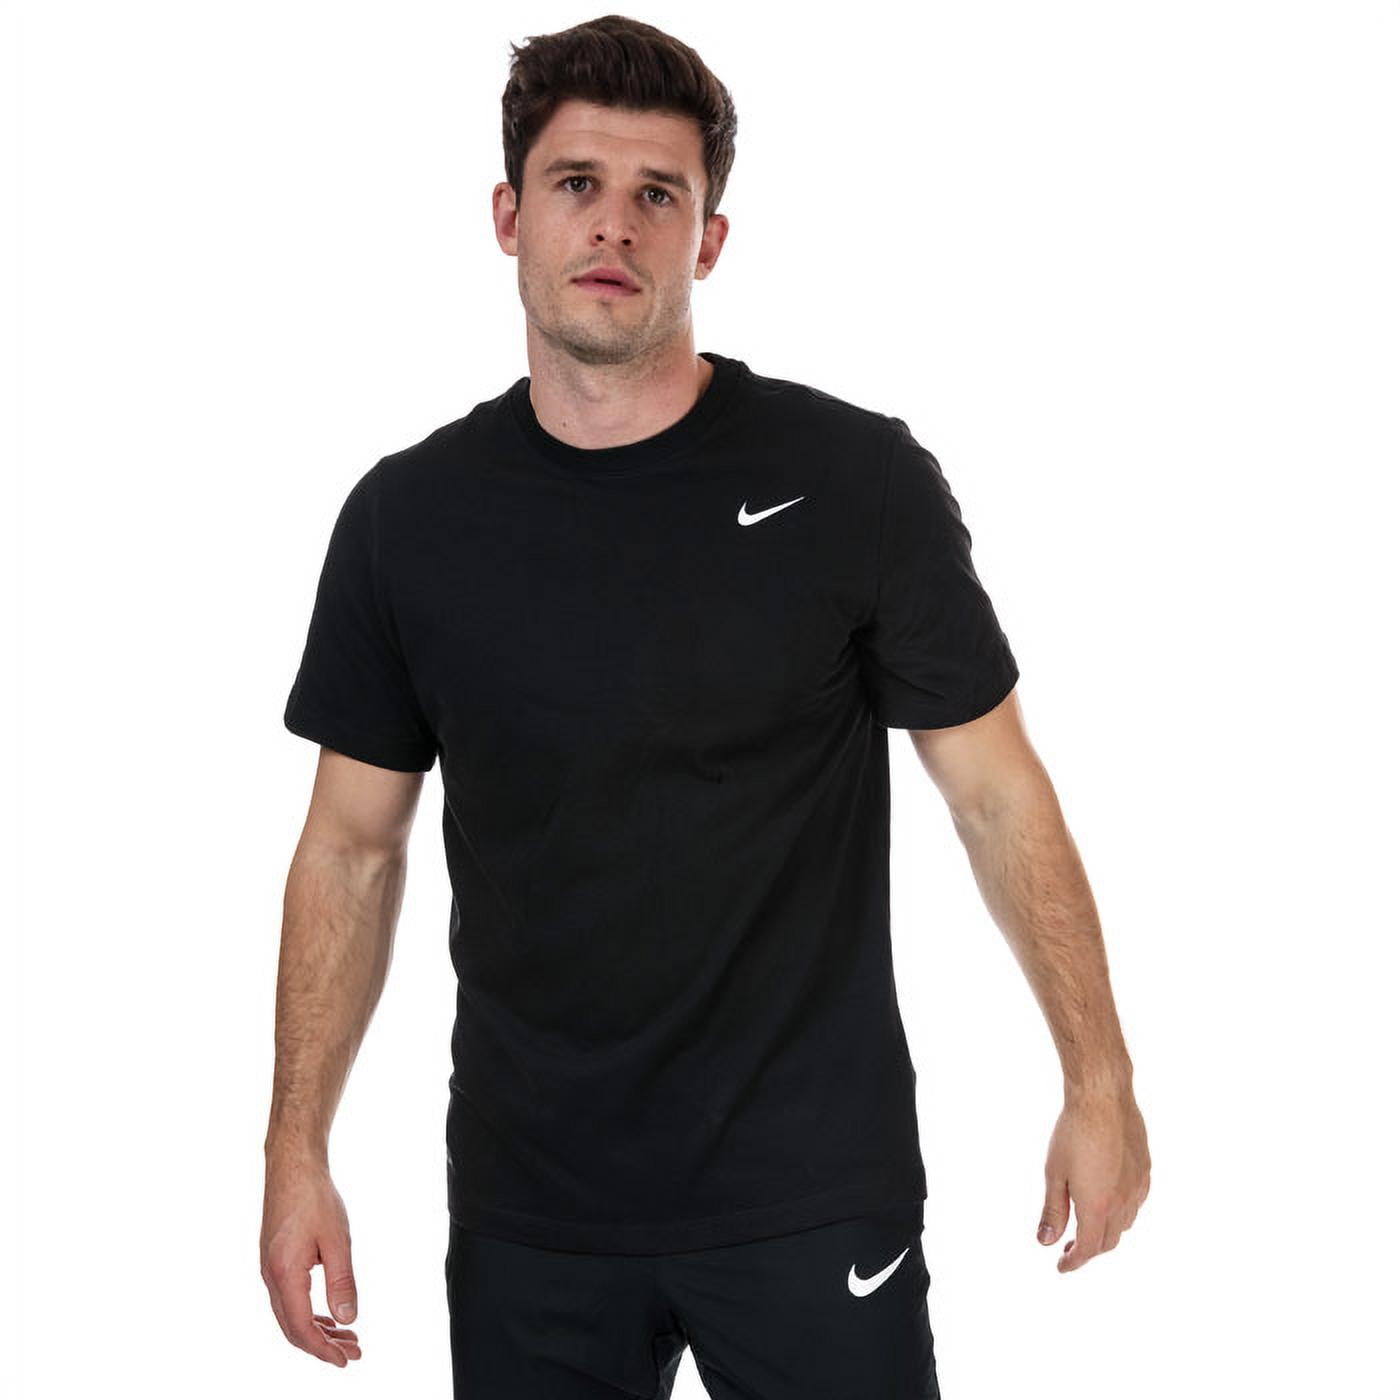 Nike BLACK Men's Sleeve Training T-Shirt, - Walmart.com